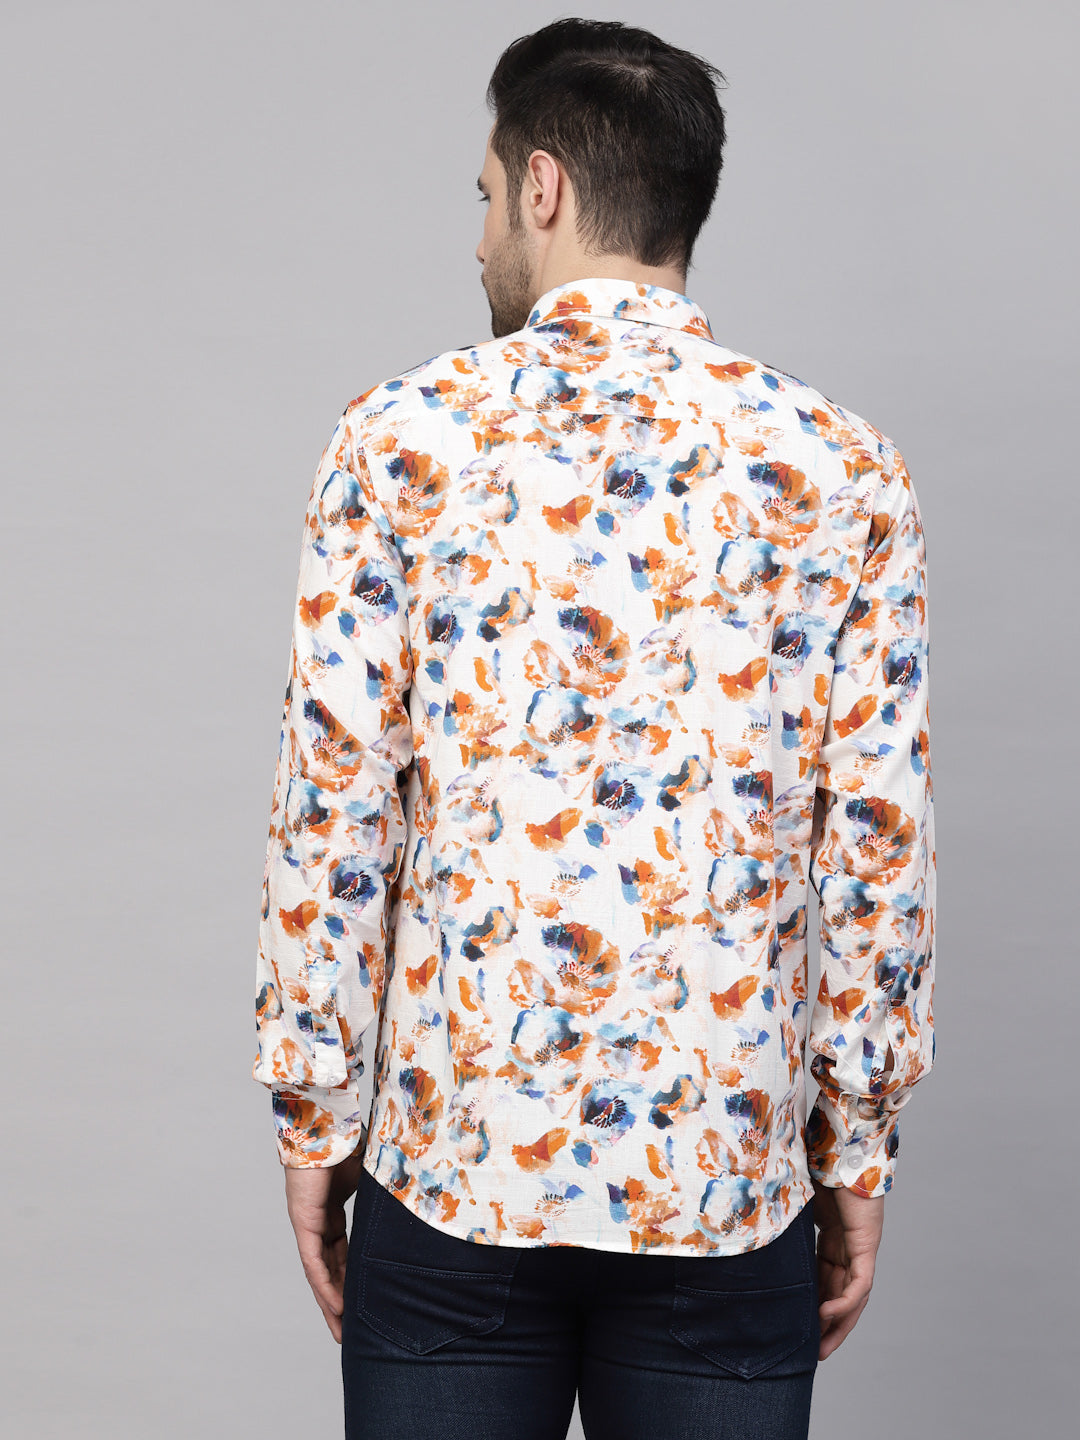 Valbone Men’s Digital Print Regular Fit Casual Blue & Orange Printed Shirt Full Sleeves